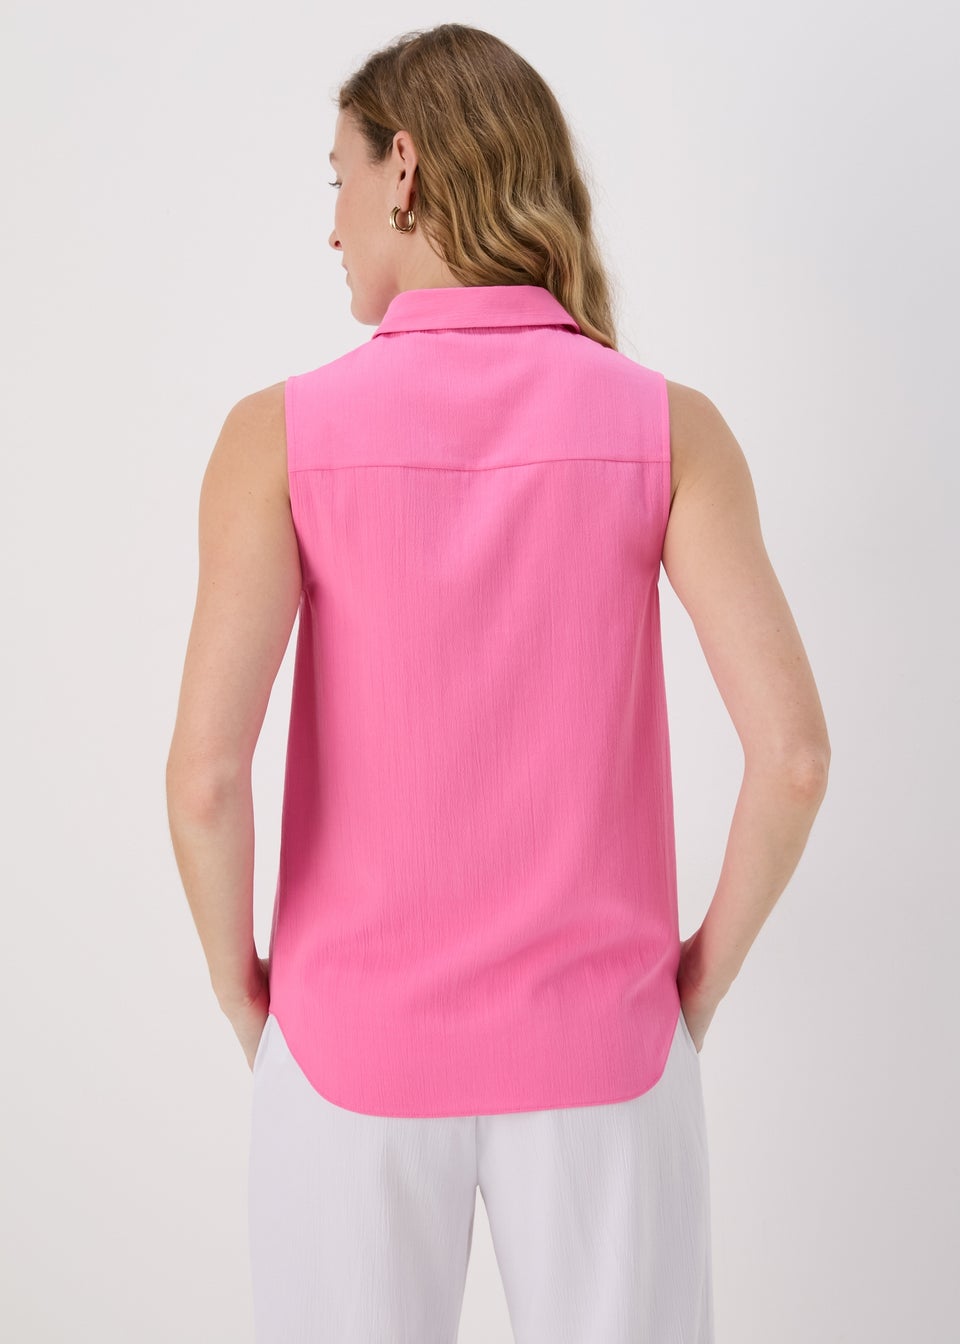 Pink Solid Sleeveless Shirt